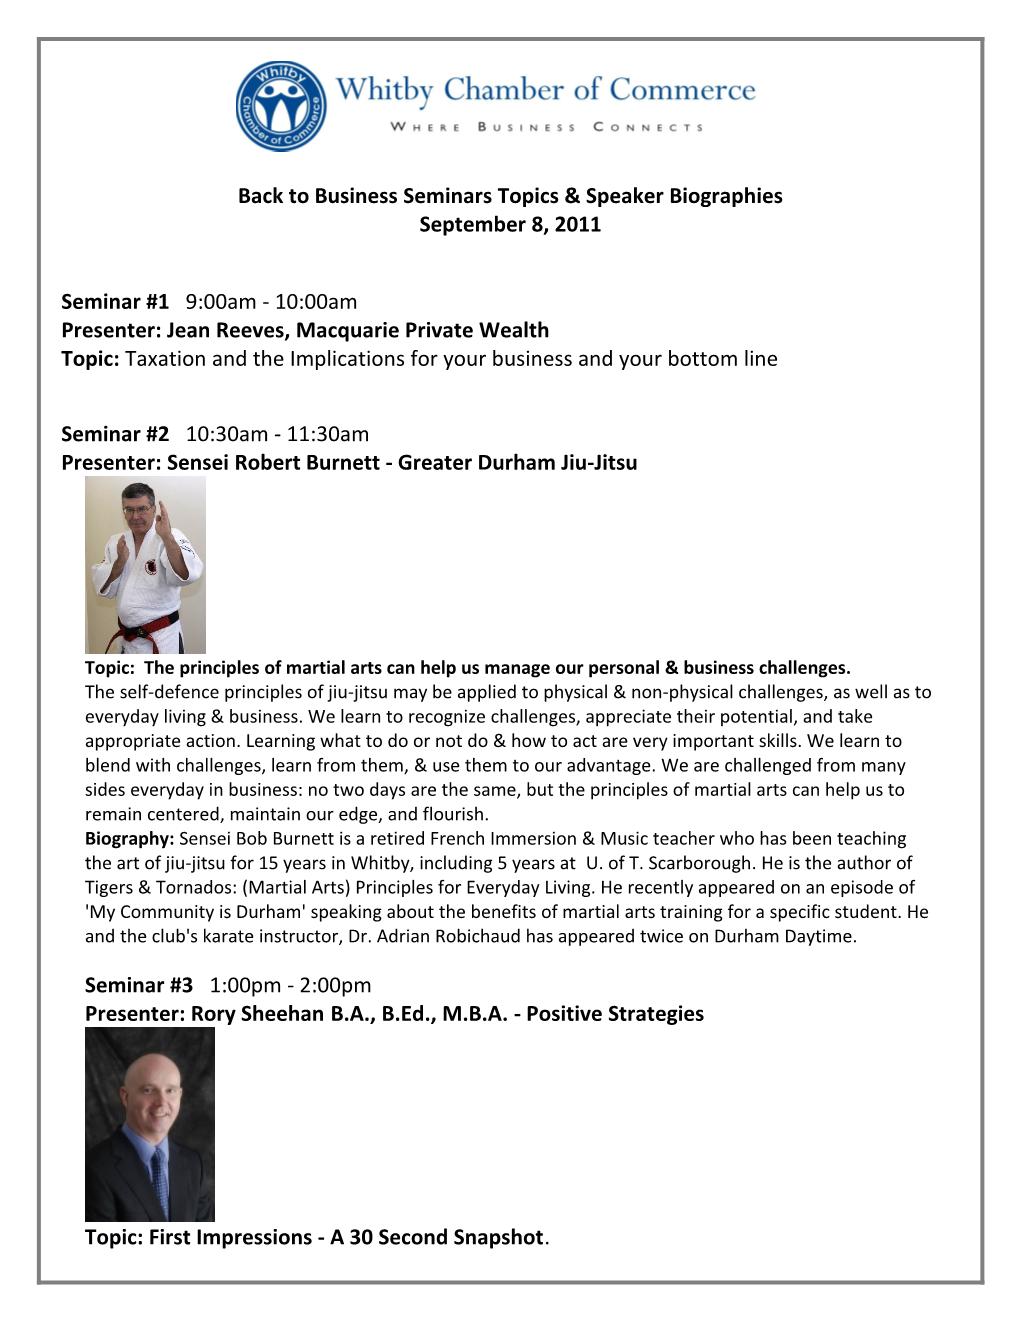 Back to Business Seminars Topics & Speaker Biographies September 8, 2011